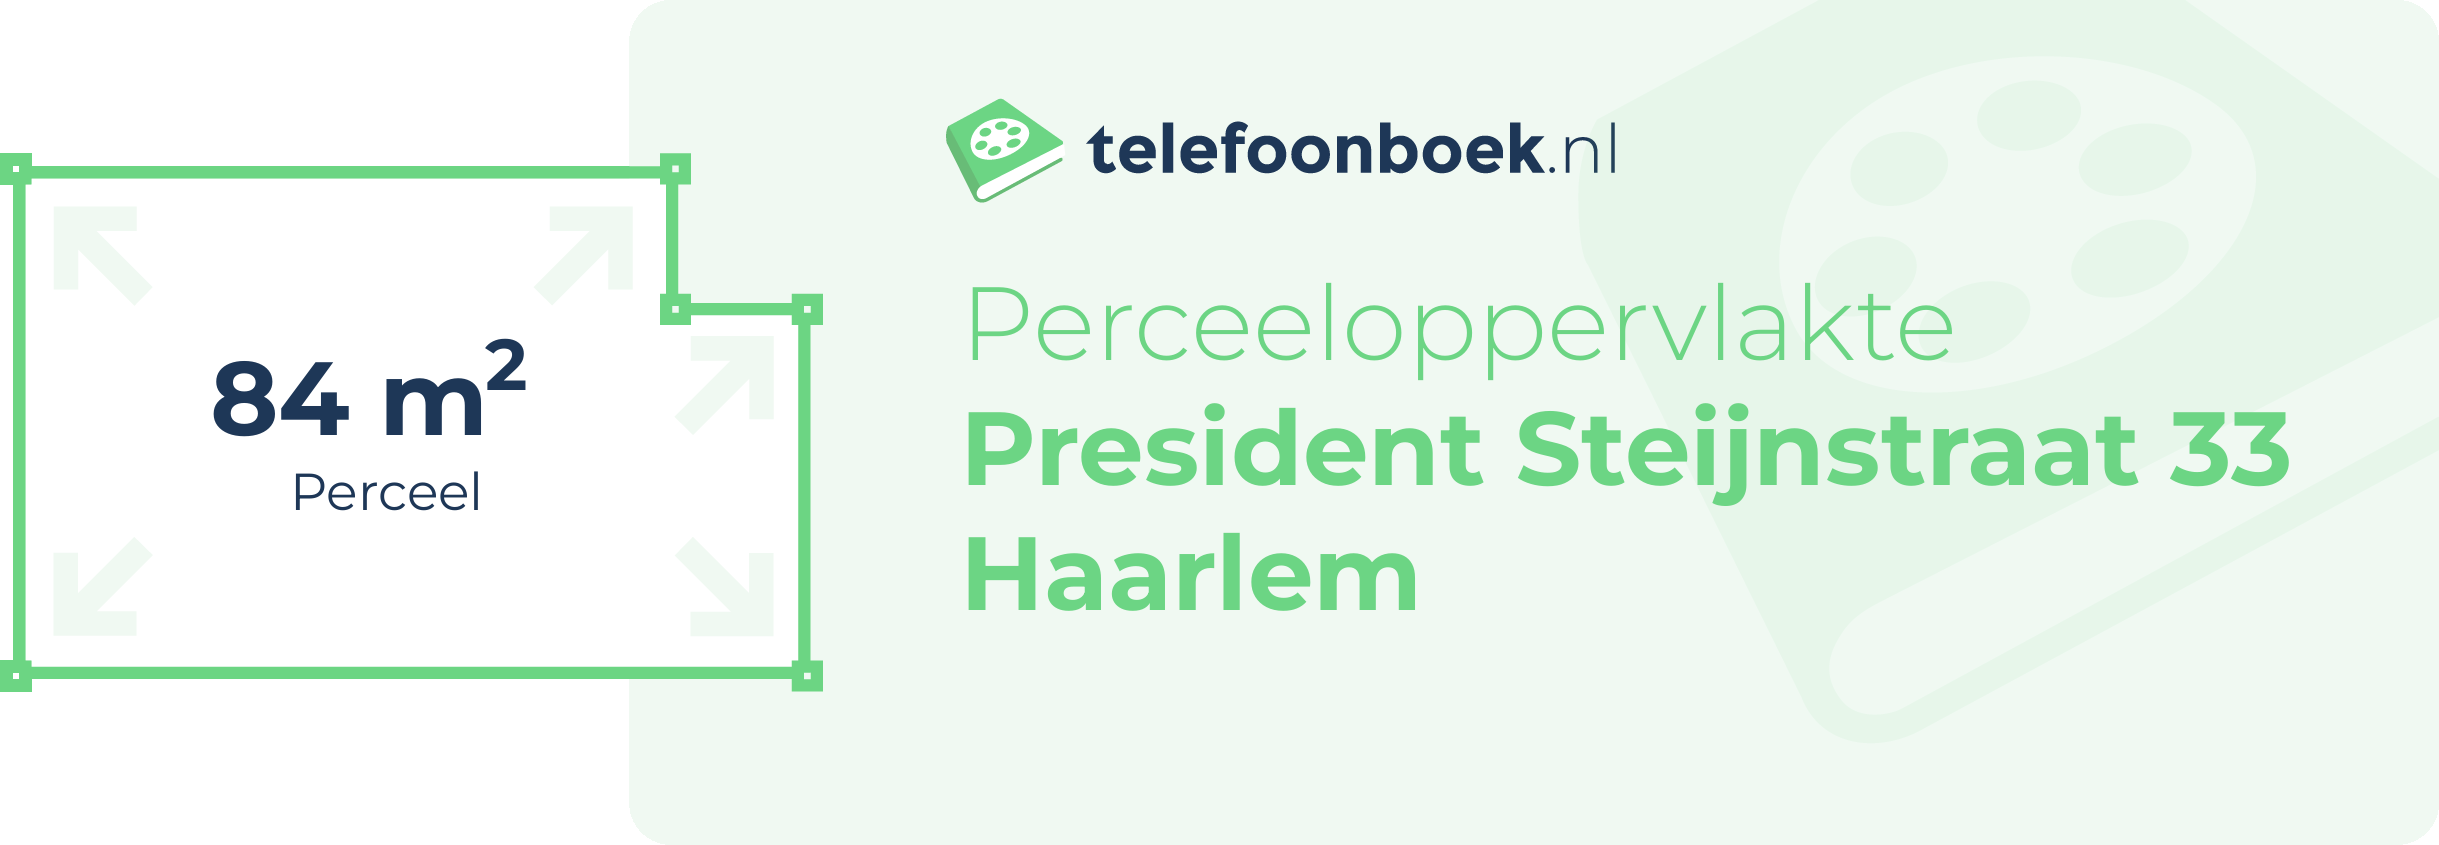 Perceeloppervlakte President Steijnstraat 33 Haarlem